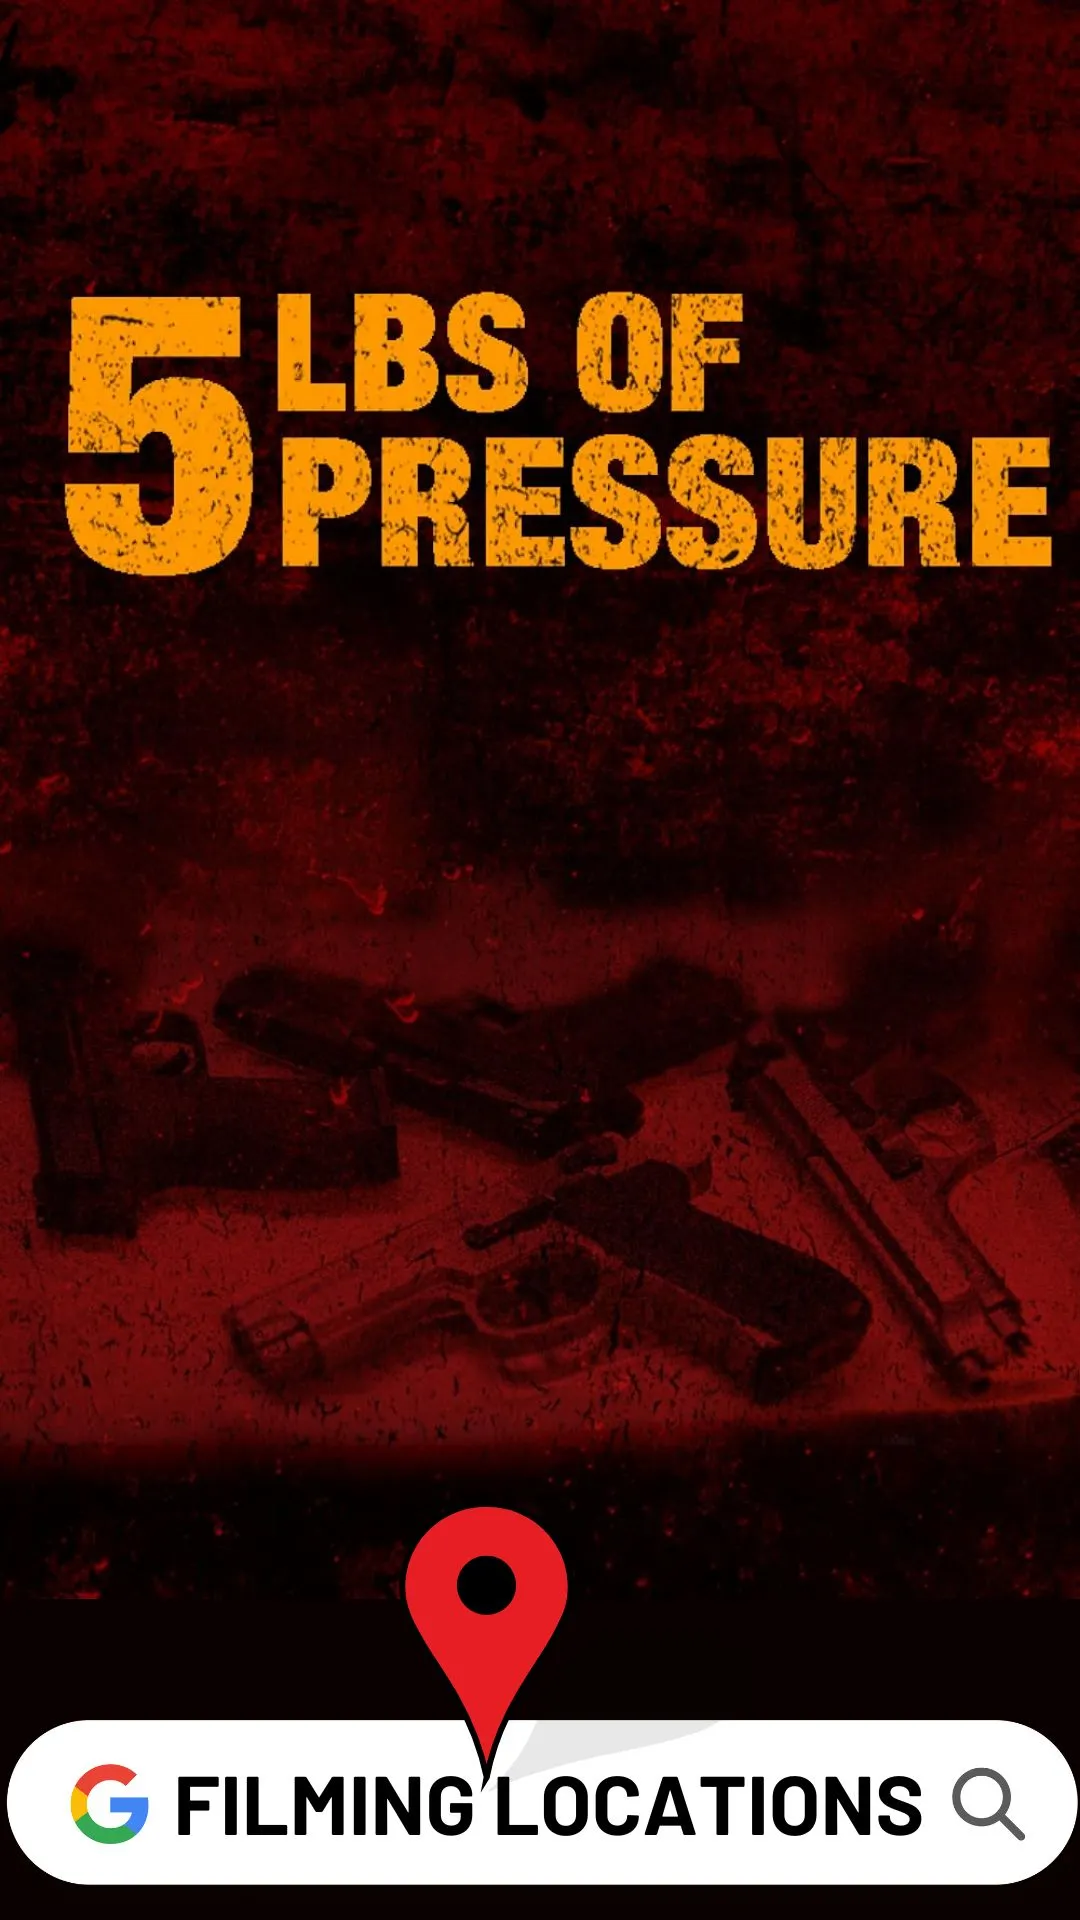 Where Is 5lbs of Pressure Filmed